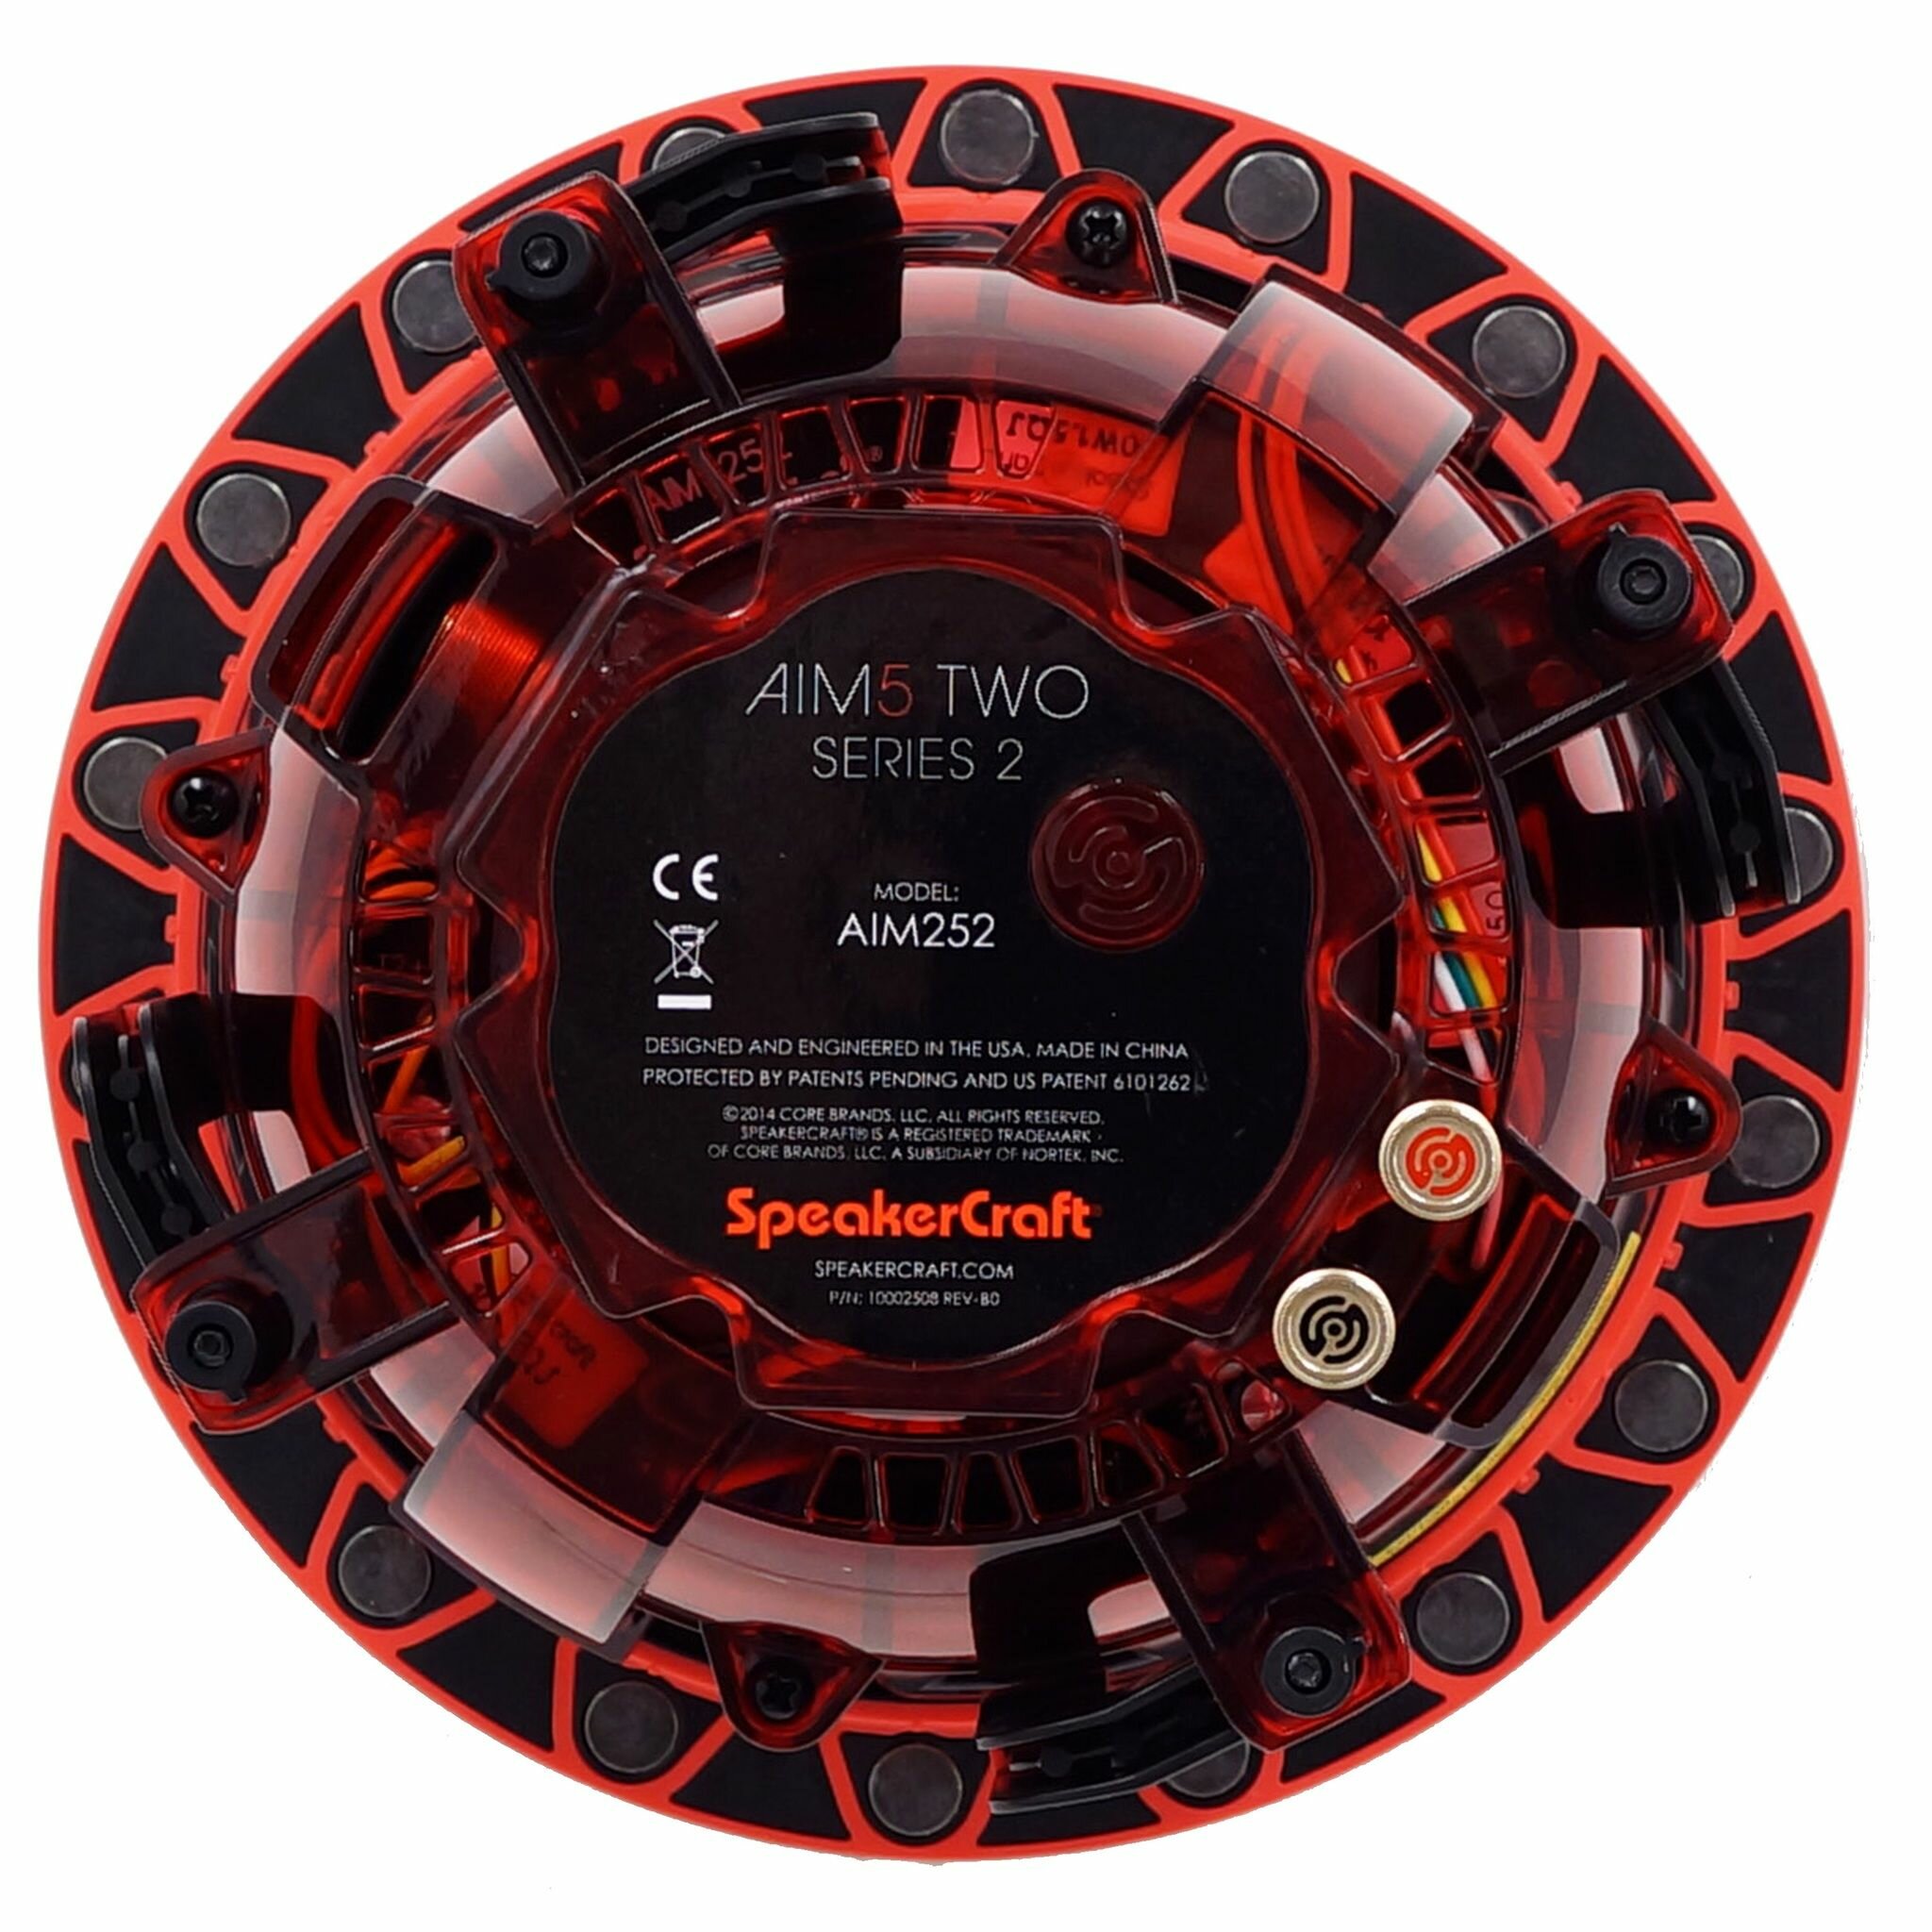 SpeakerCraft AIM5 TWO Series 2 акустика встраиваемая